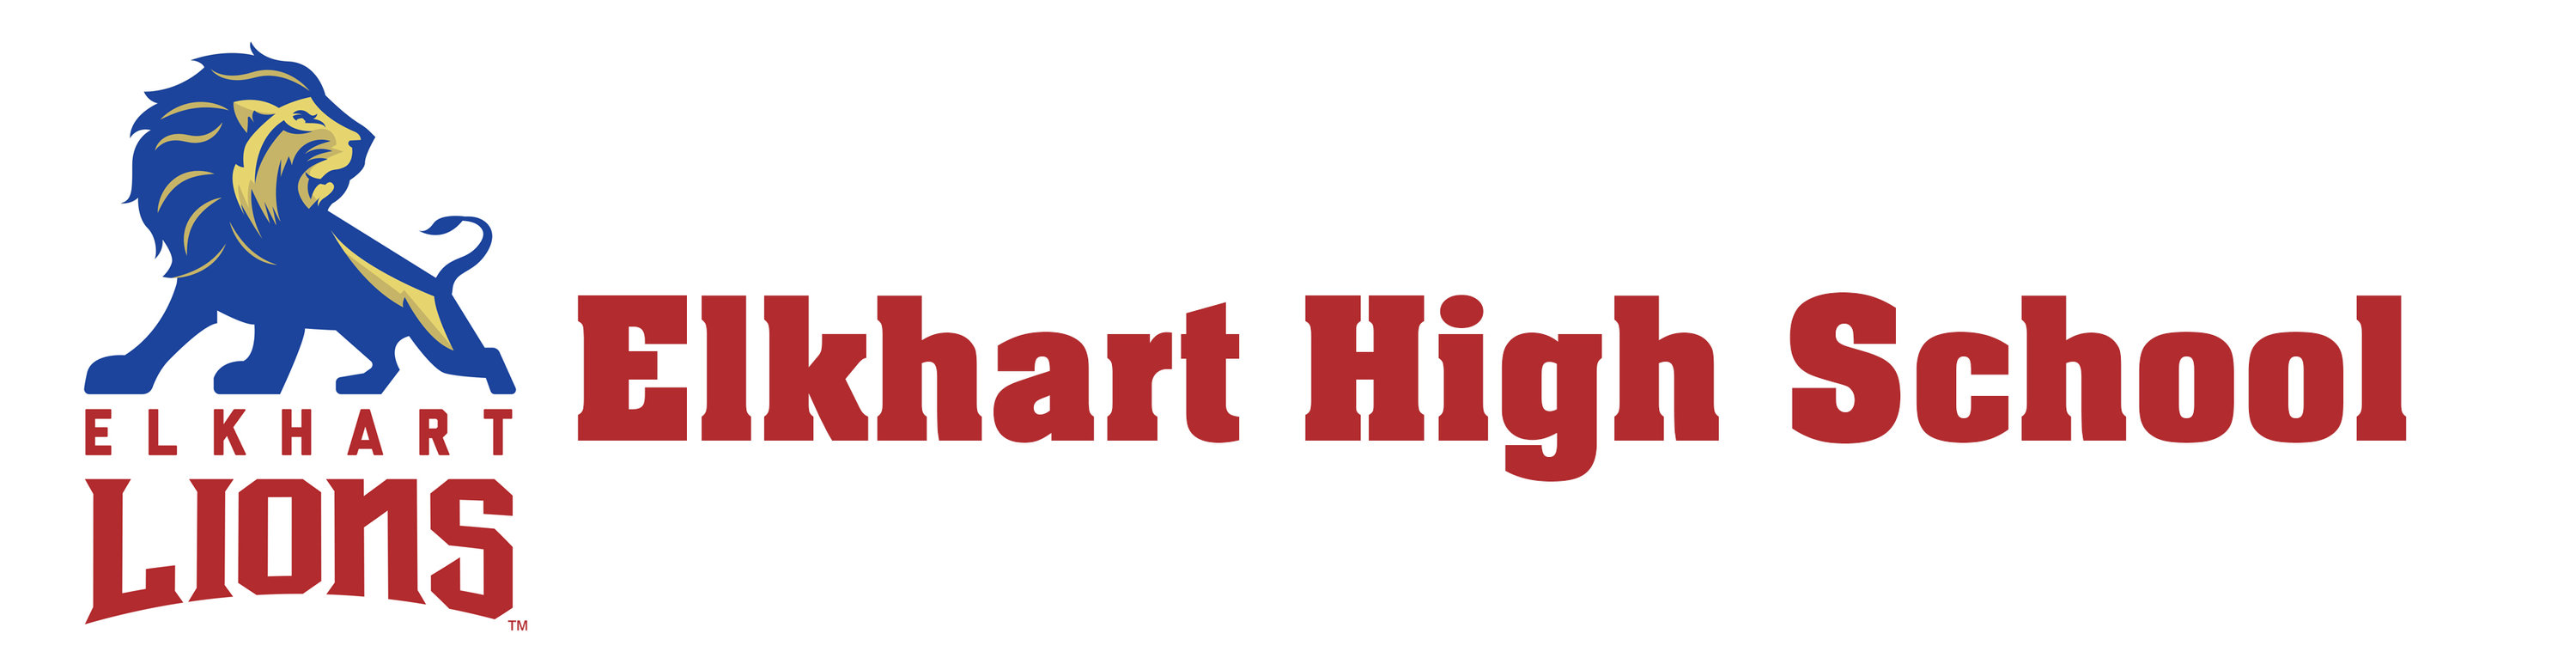 elkhart-high-school-derby-photography